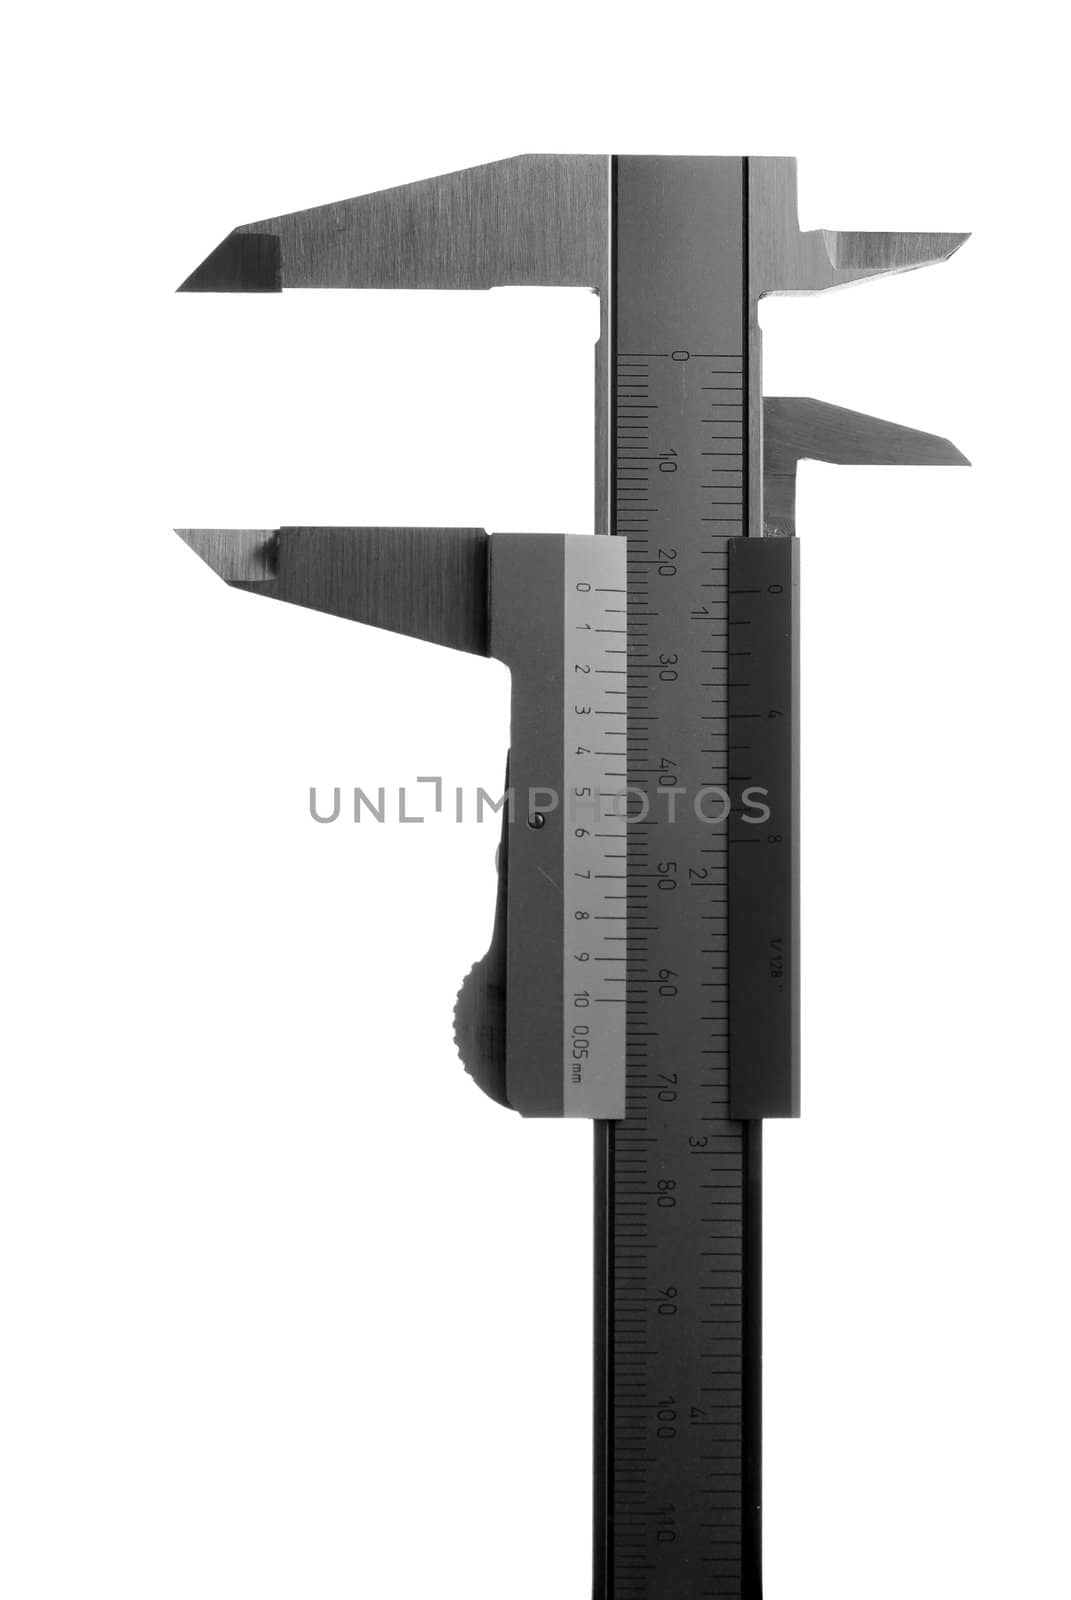 Precision measuring tool by Gjermund